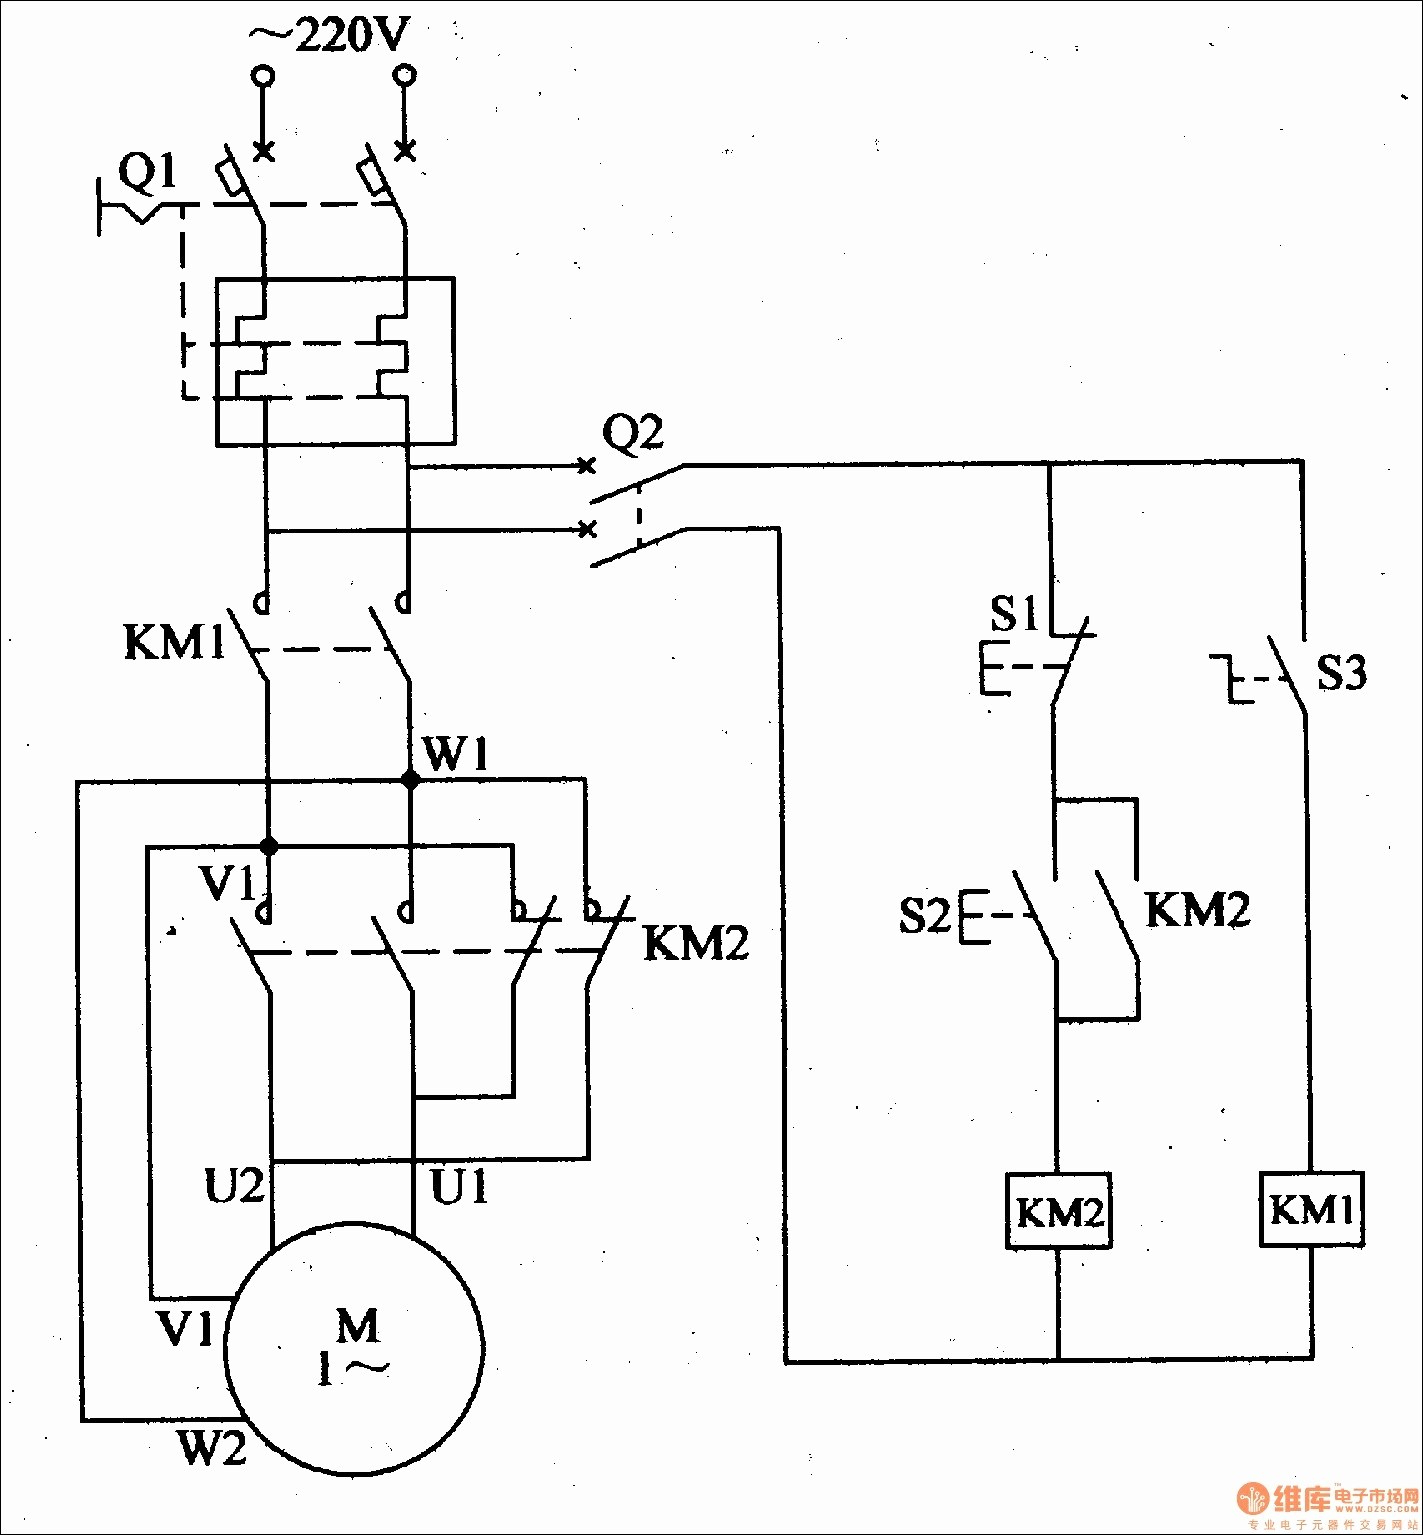 Speaker Mic Wiring Diagram | Best Wiring Library - Smith And Jones Electric Motors Wiring Diagram